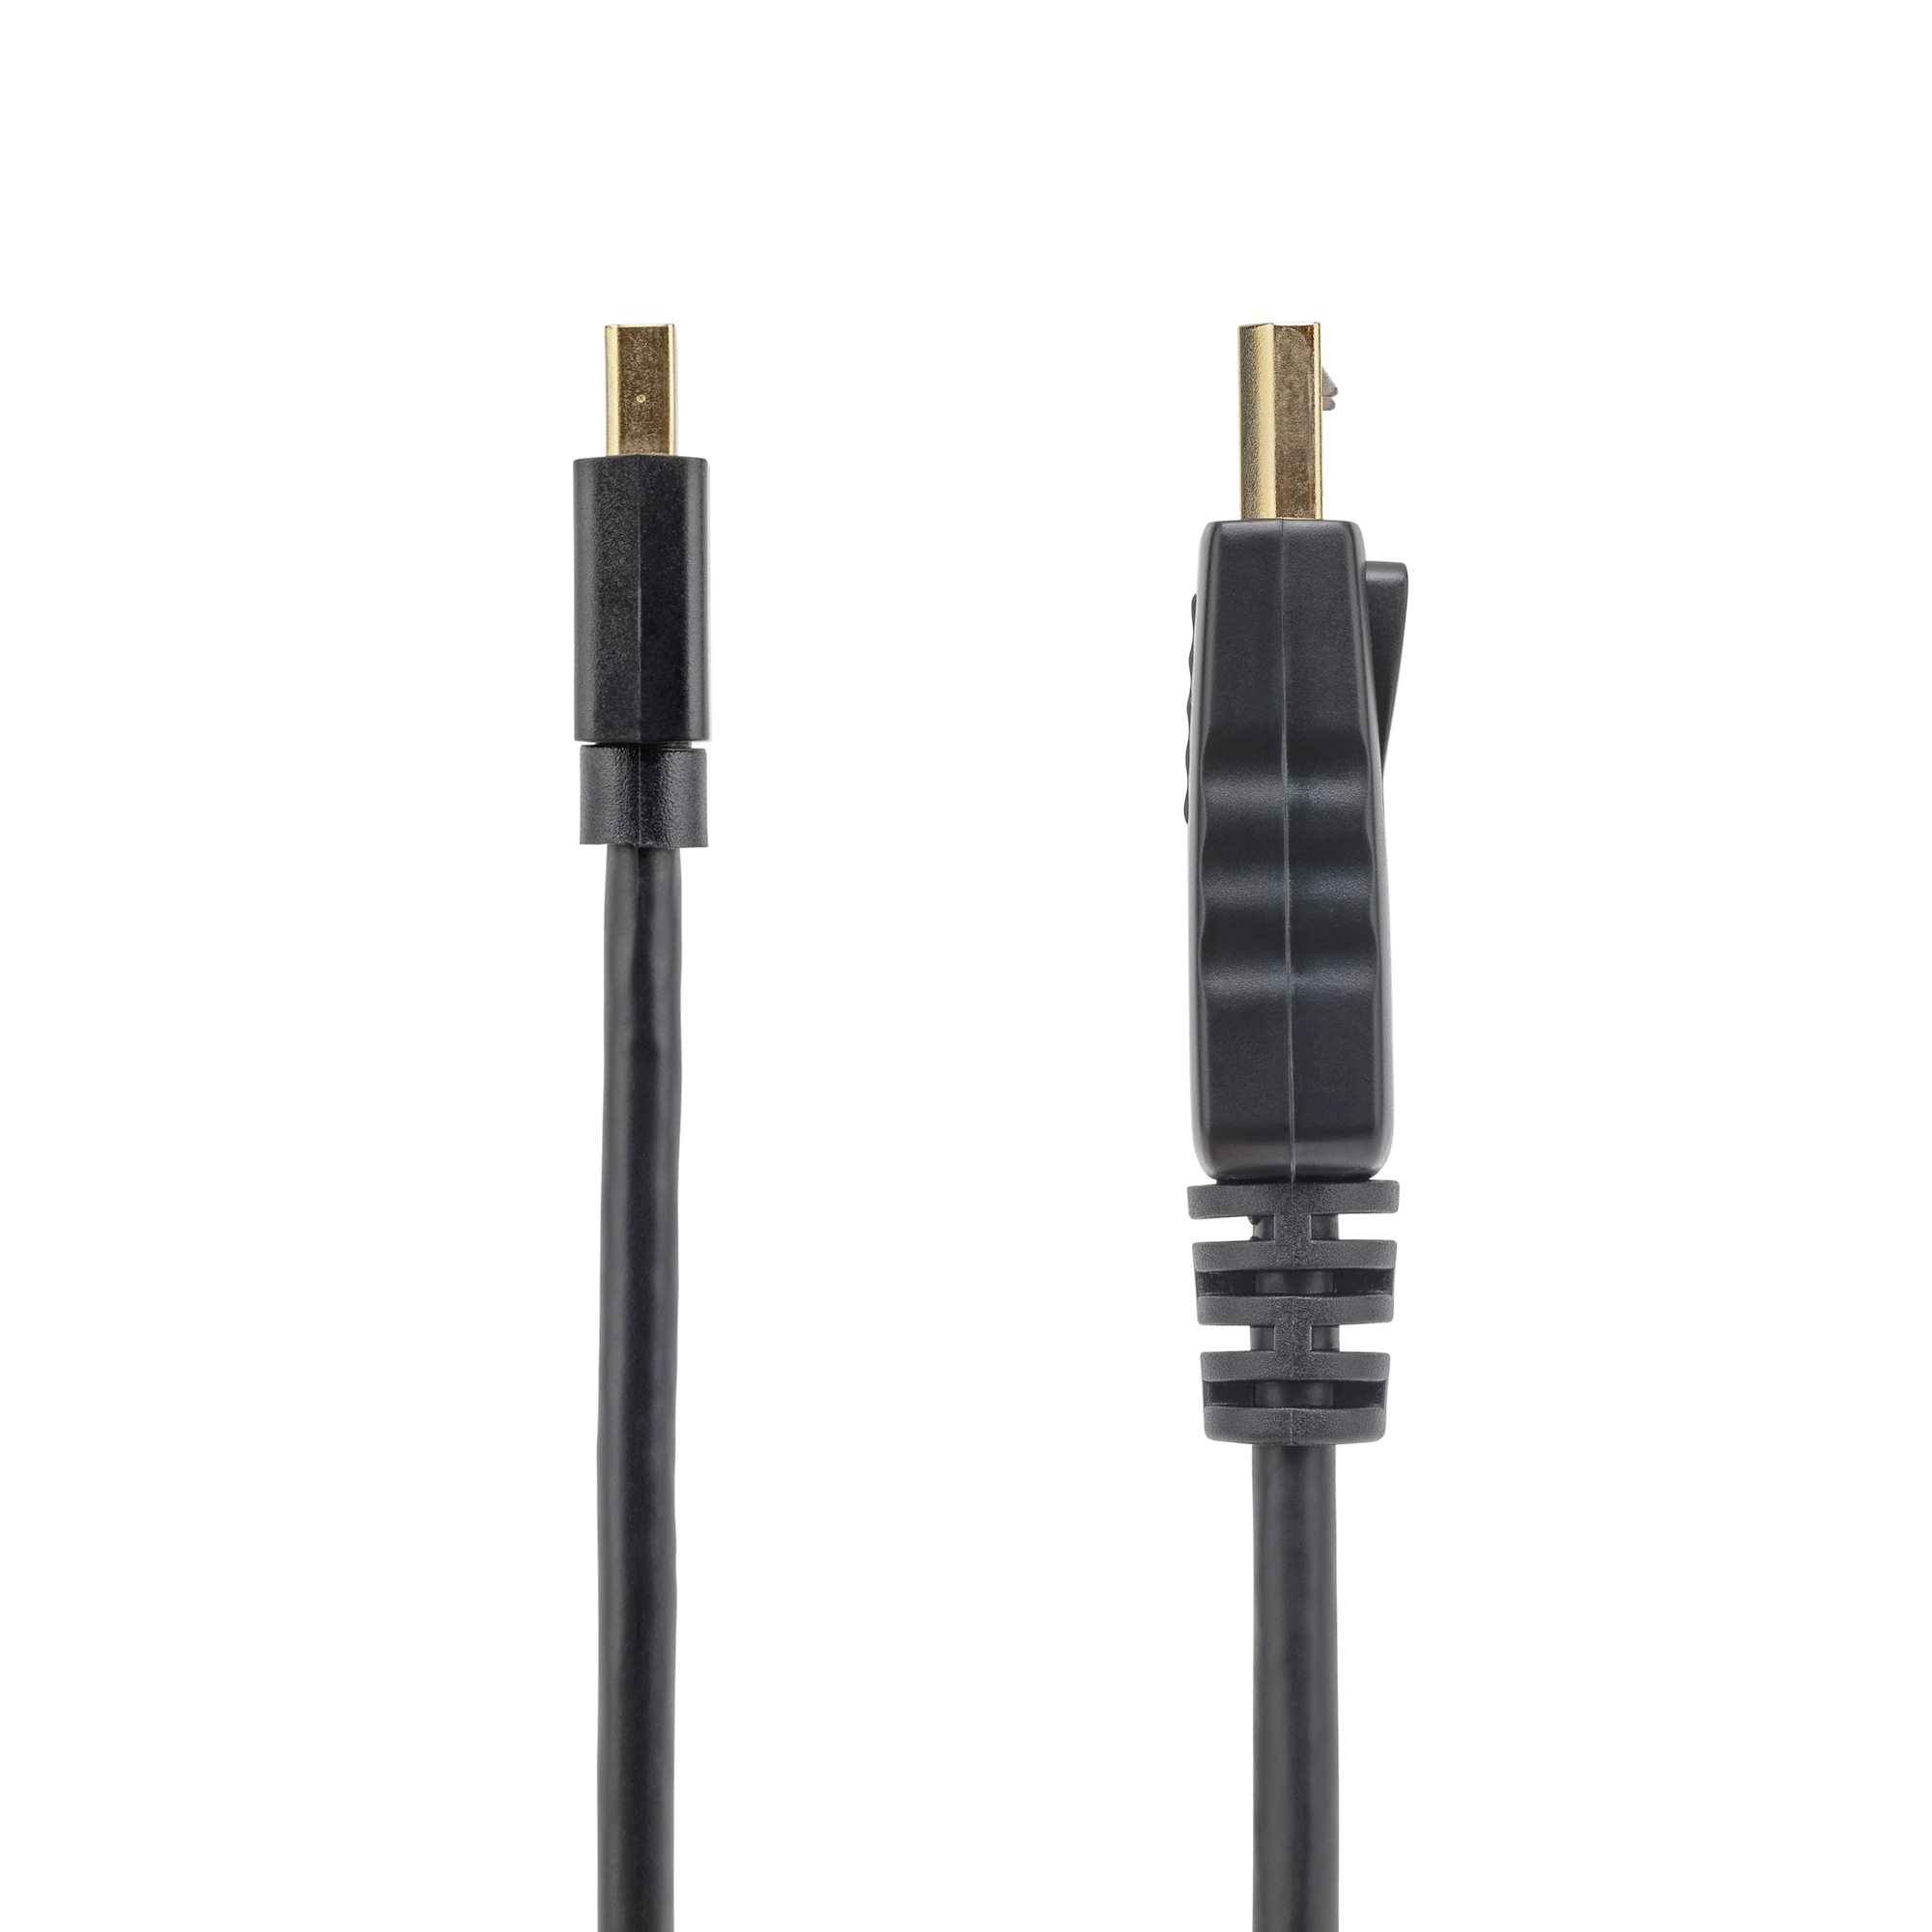  Moread DisplayPort to DisplayPort Cable, 6 Feet, Gold